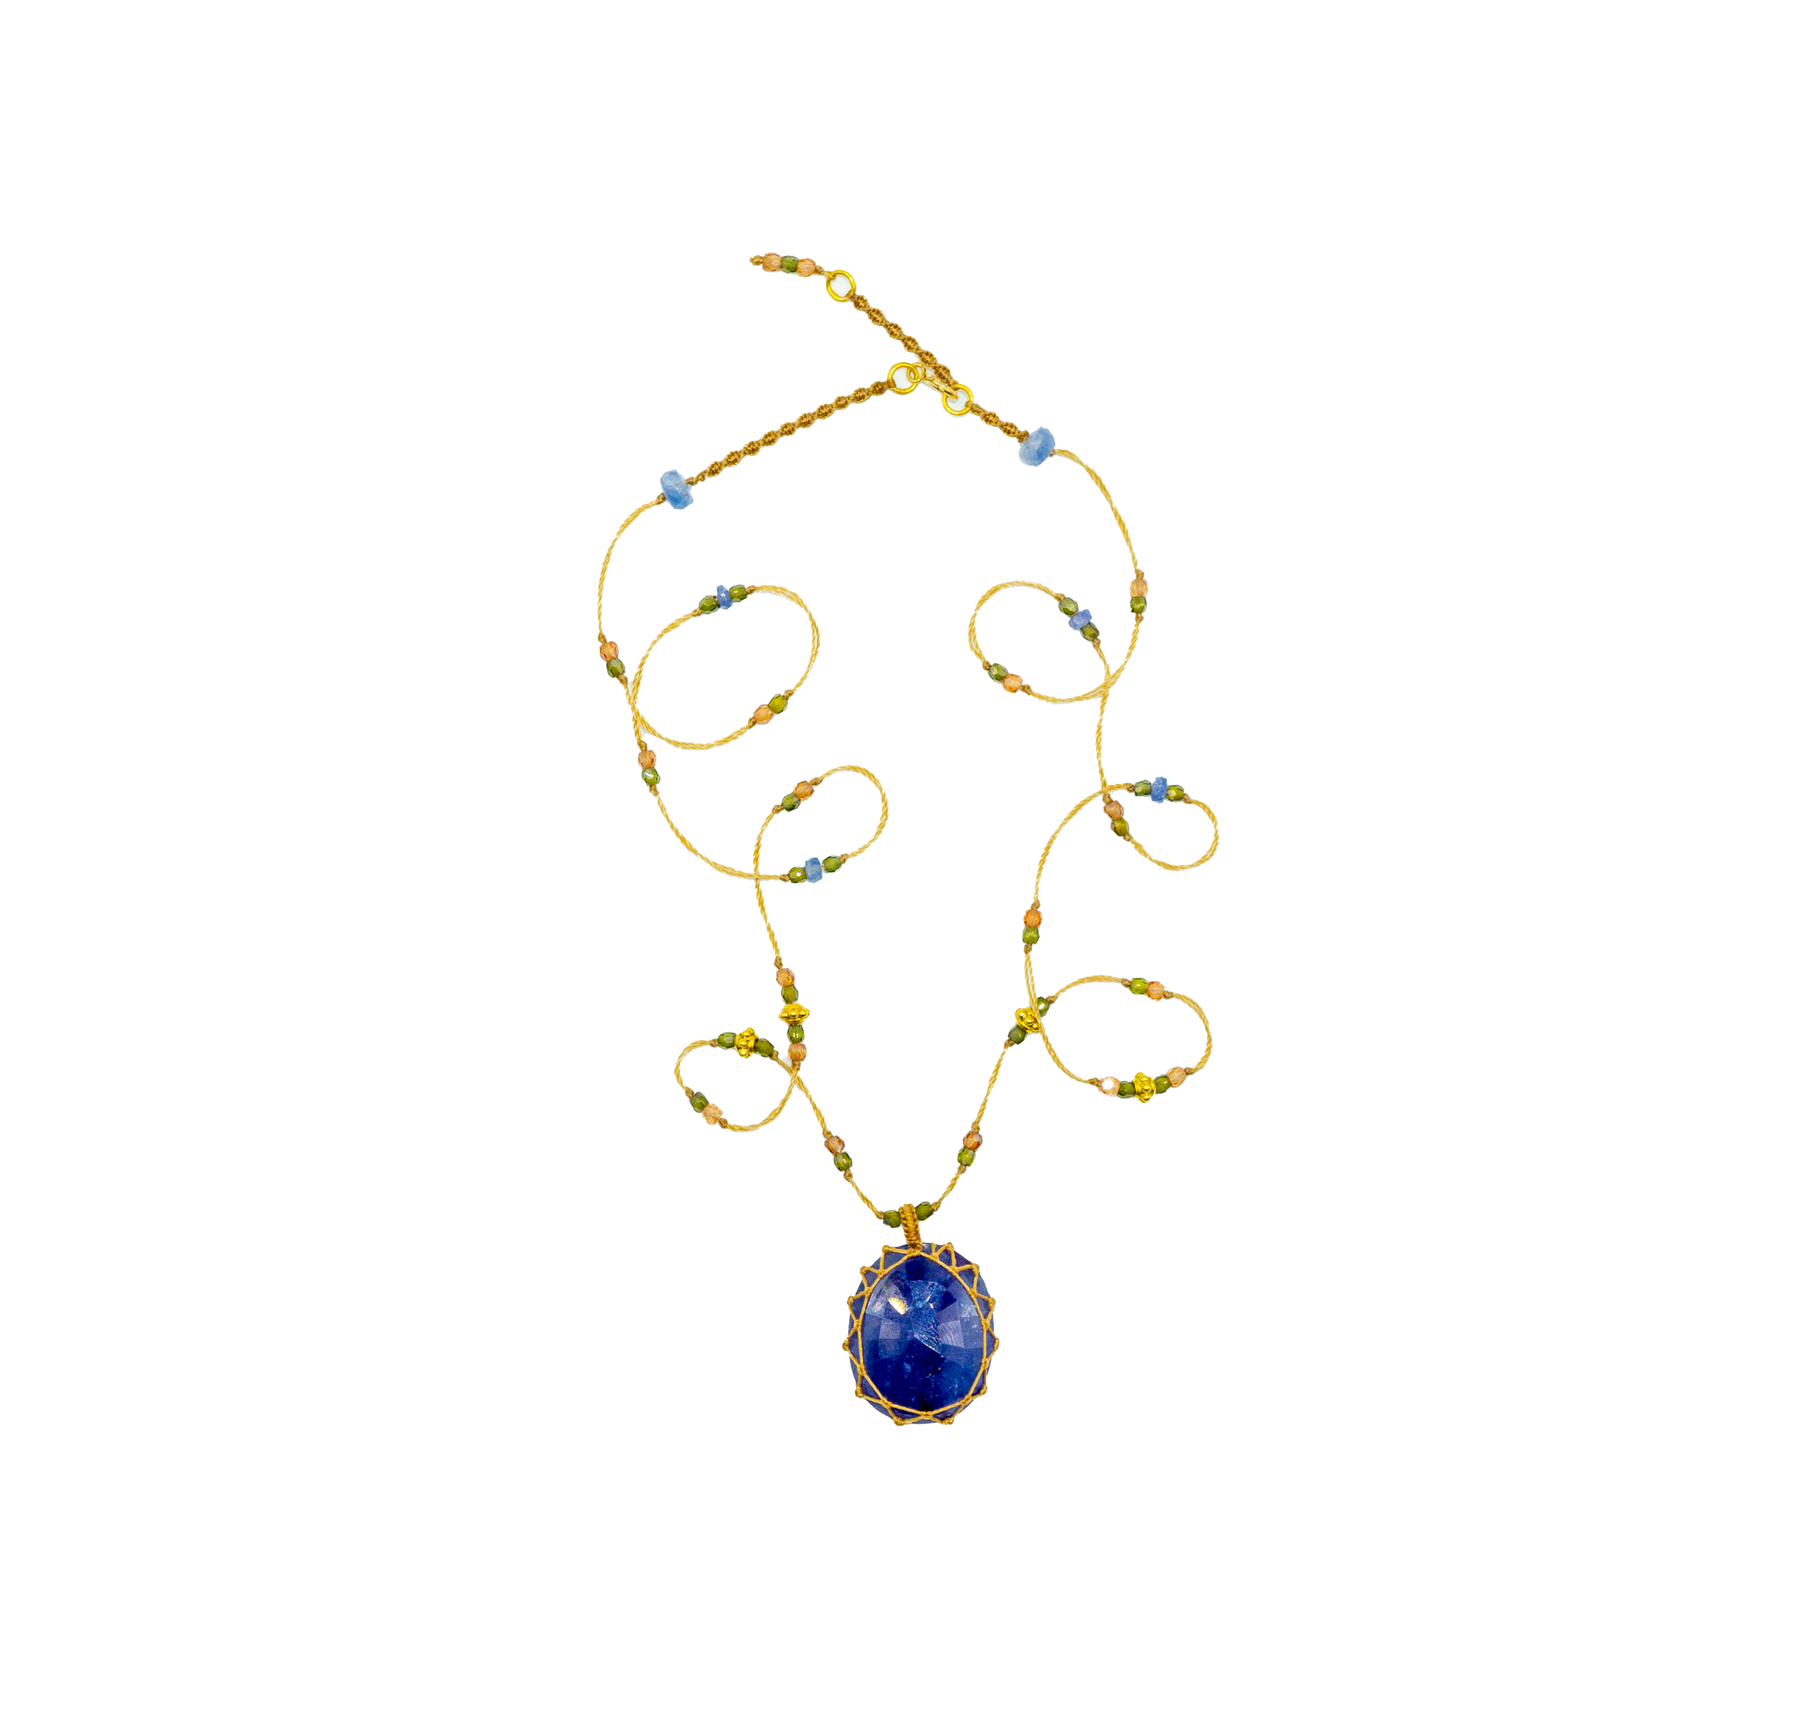 So Precious Tibetan Short Necklace - Blue Glassfilled - Mix Sapphire - Beige Thread